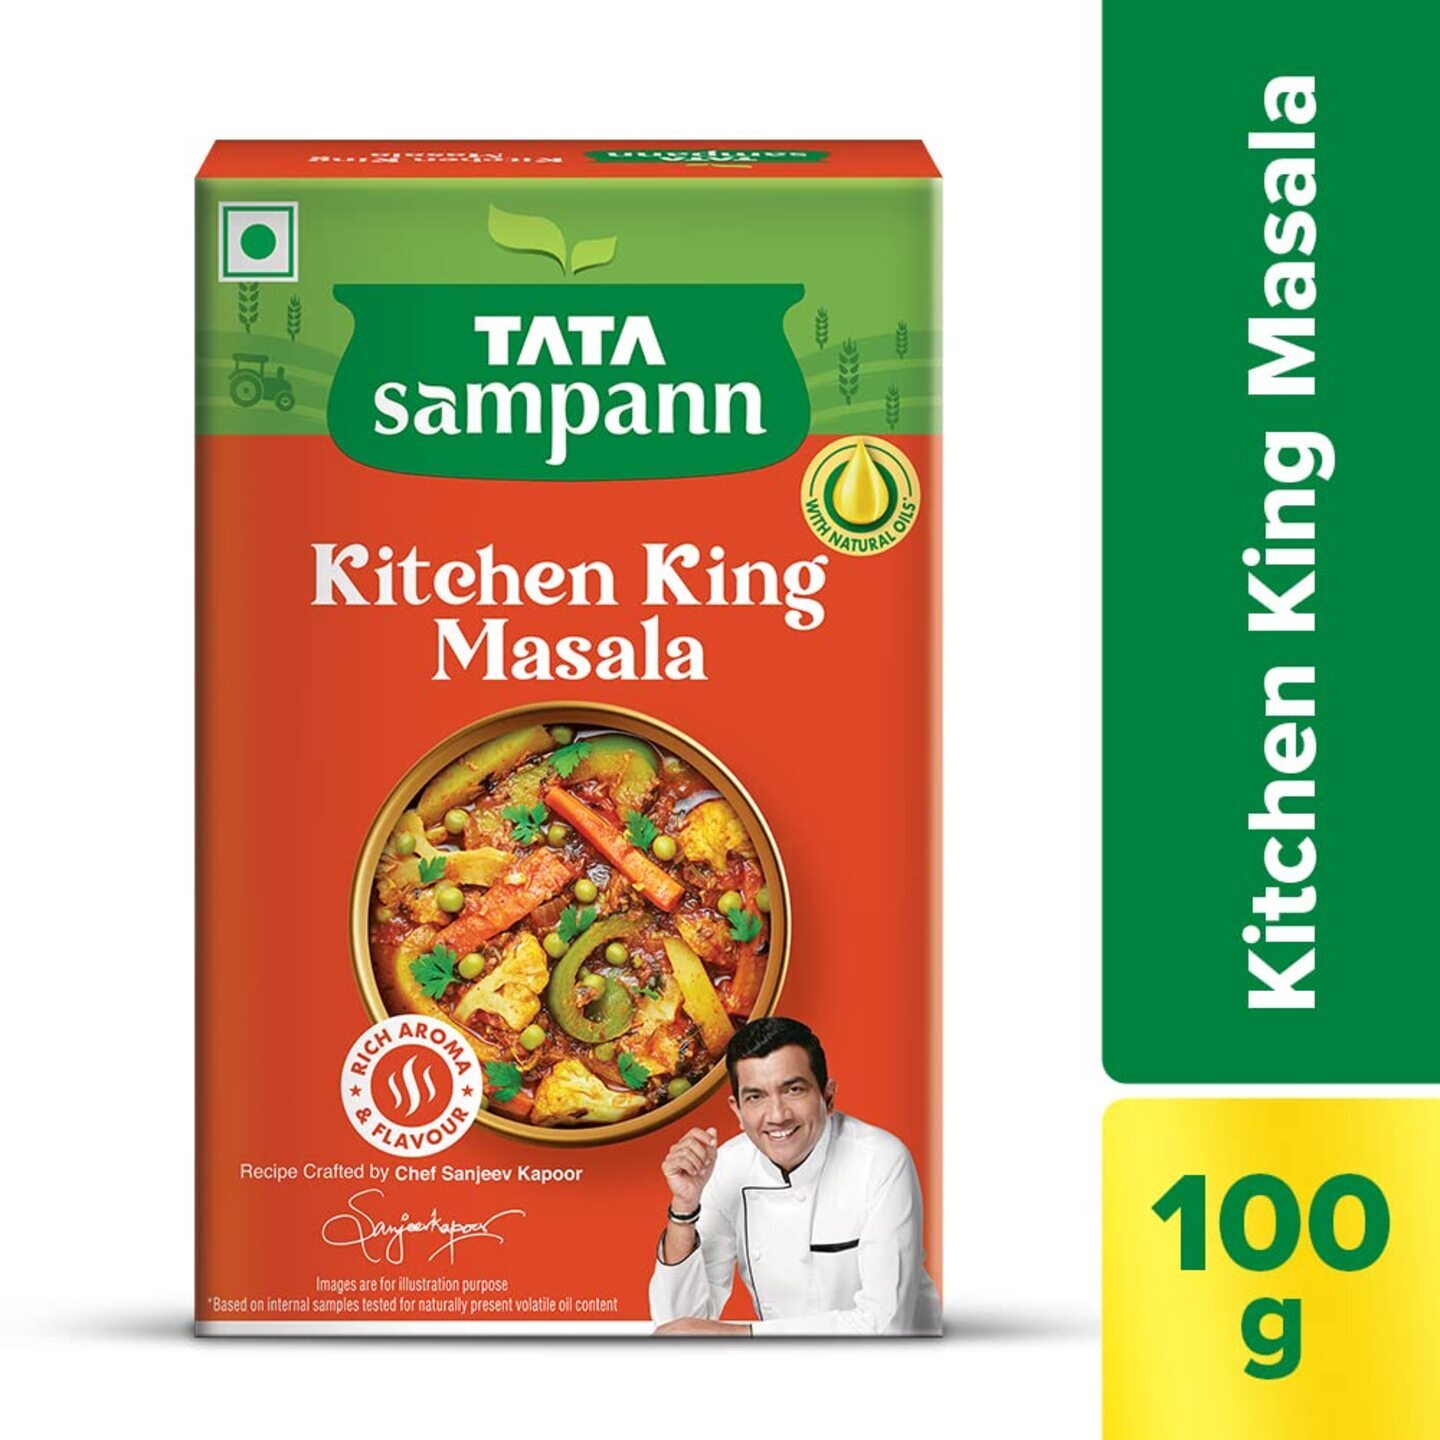 Tata Sampann Kitchen King Masala with Natural Oils, Crafted by Chef Sanjeev Kapoor, 100g